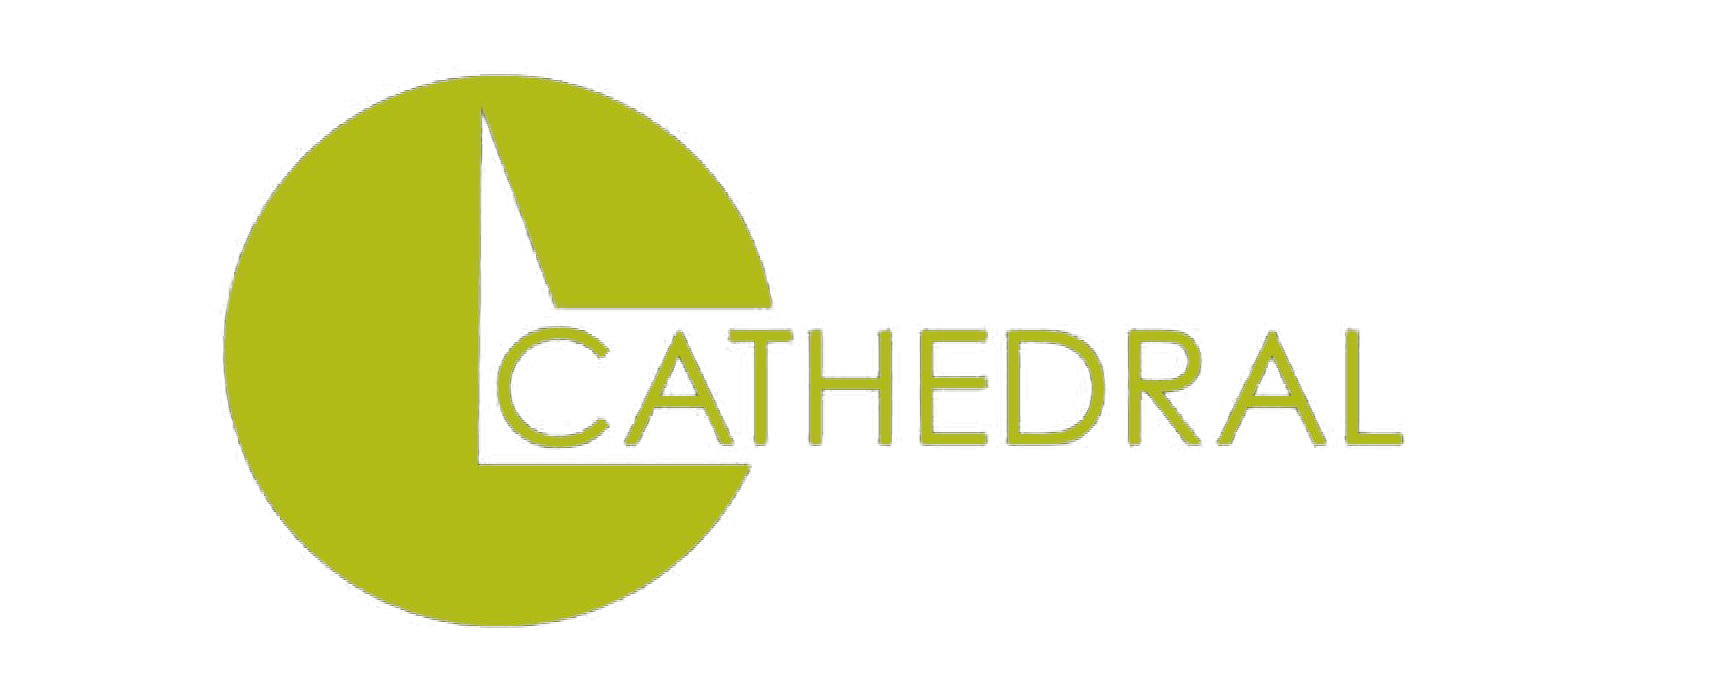 Cathedral Logo Transparent Background